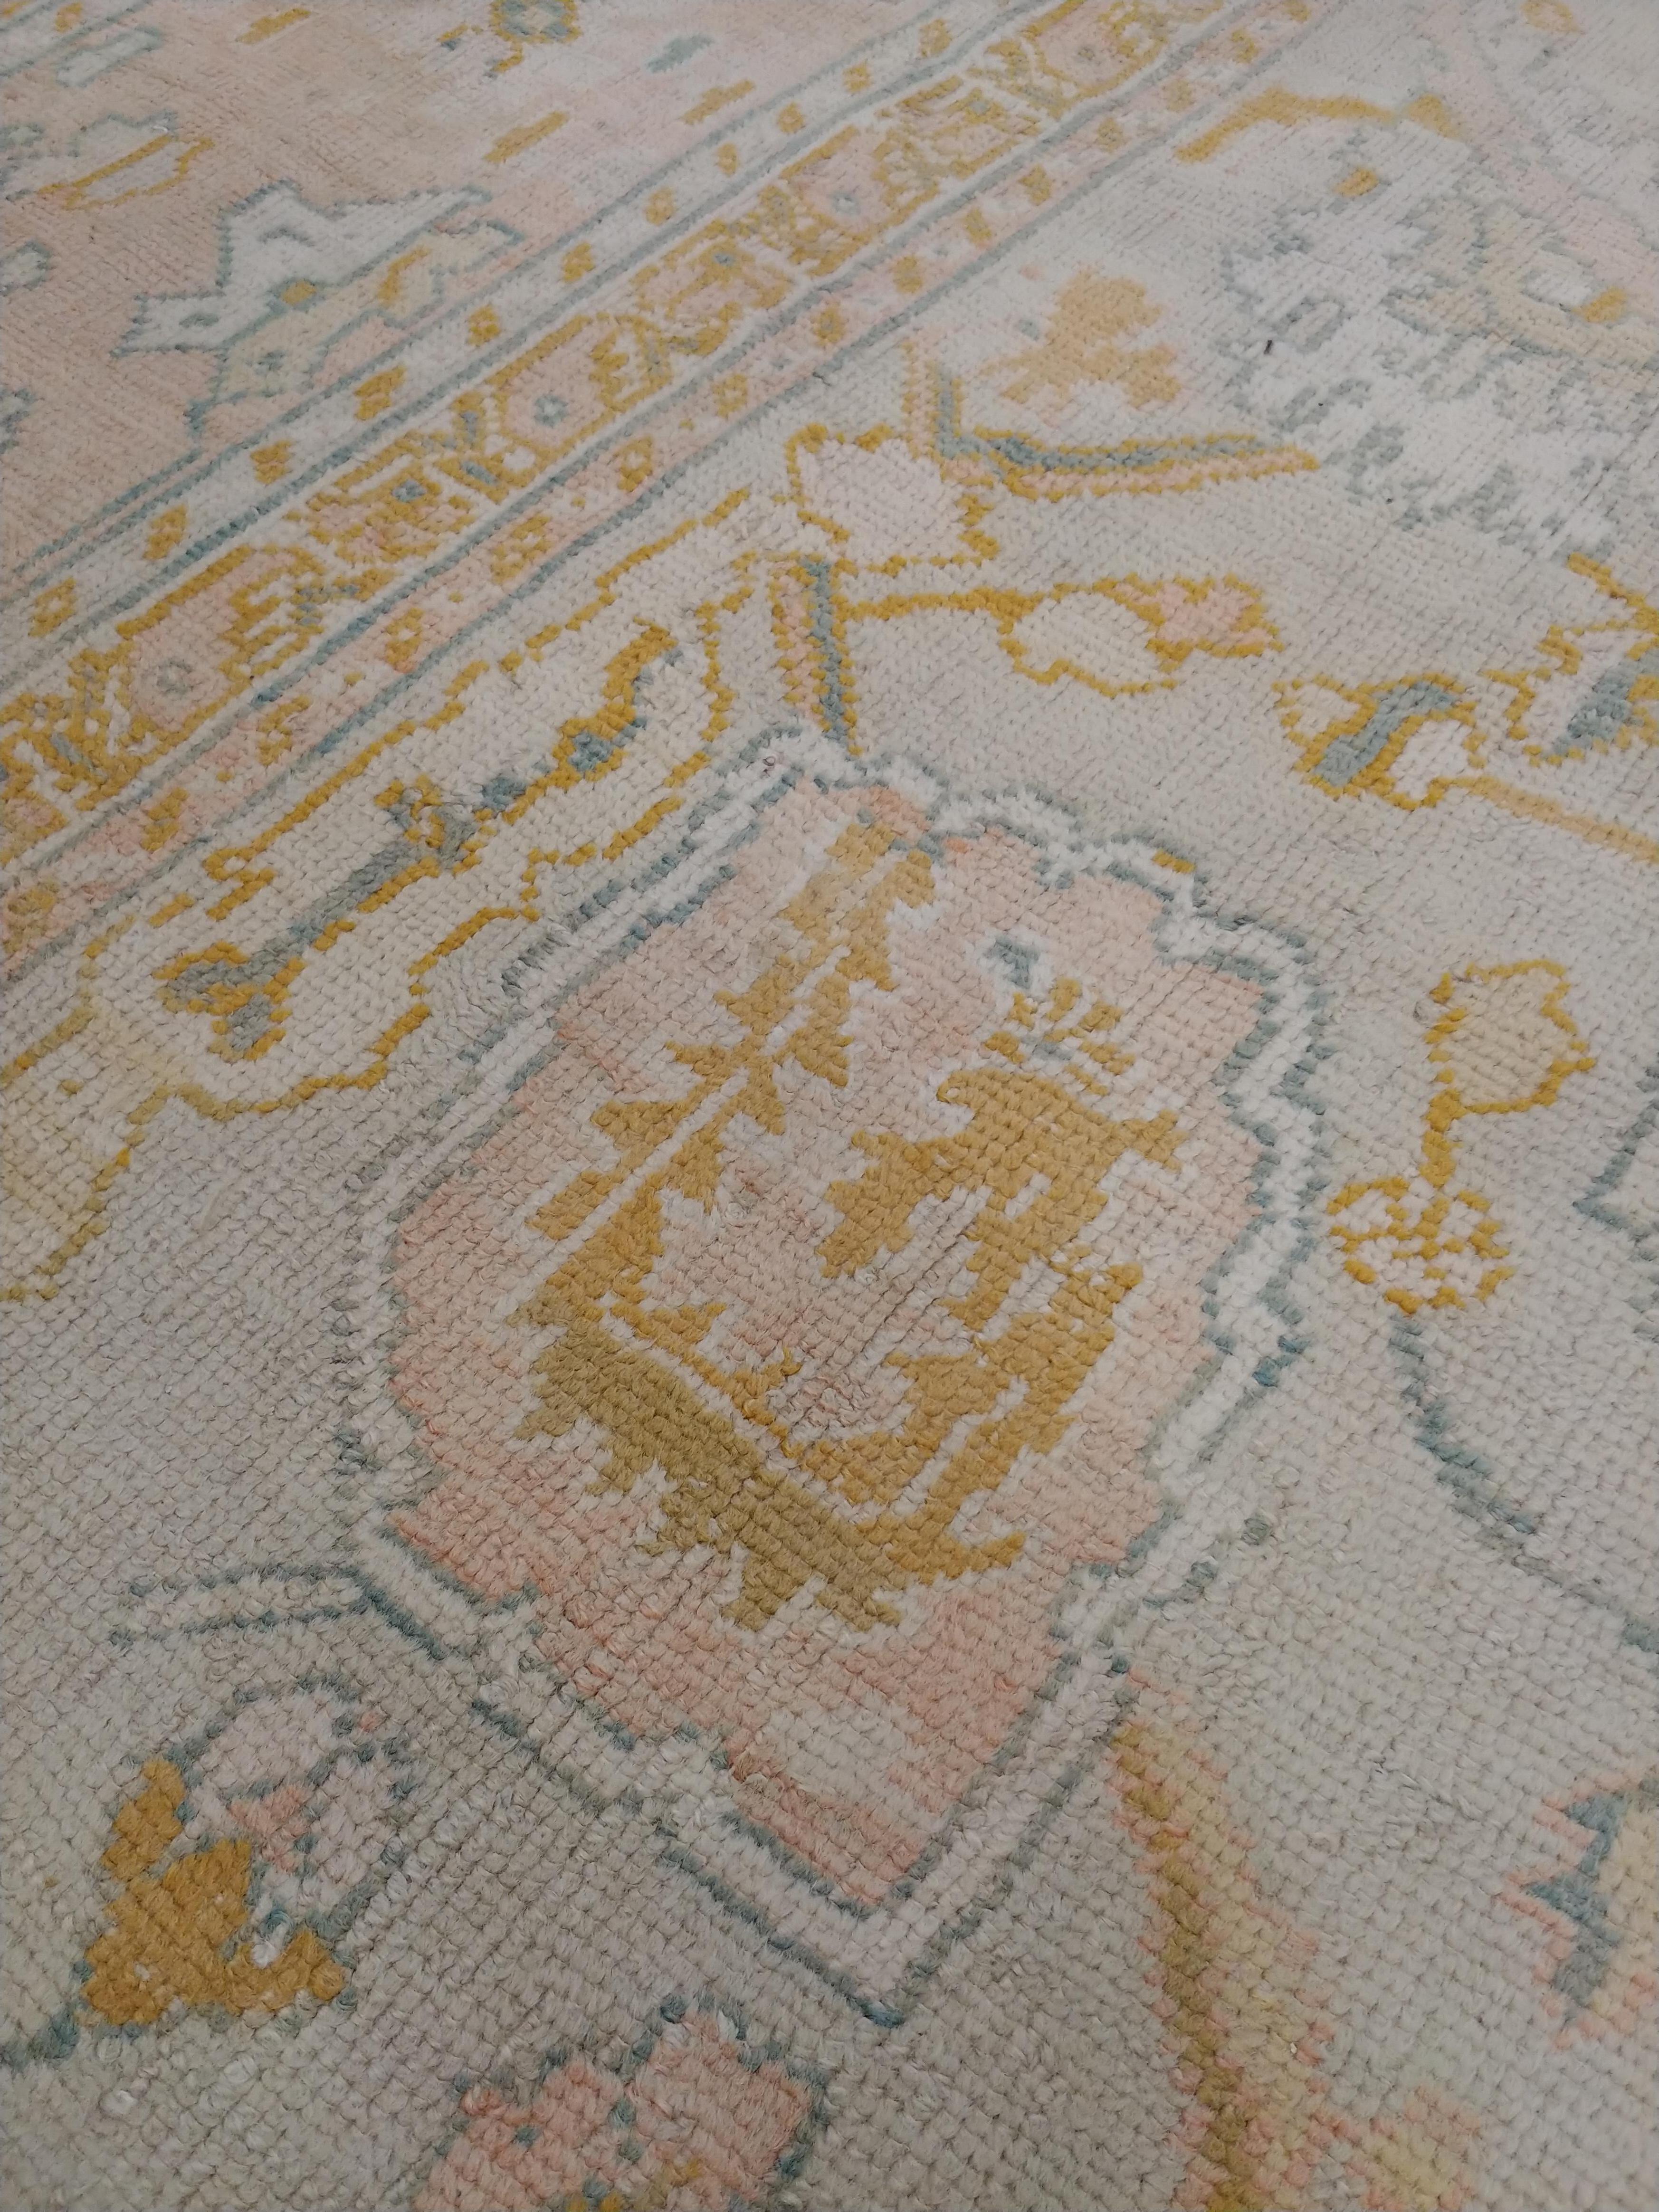 19th Century Antique Oushak Carpet, Handmade Turkish Oriental Rug, Beige, Taupe, Soft Shrimp For Sale